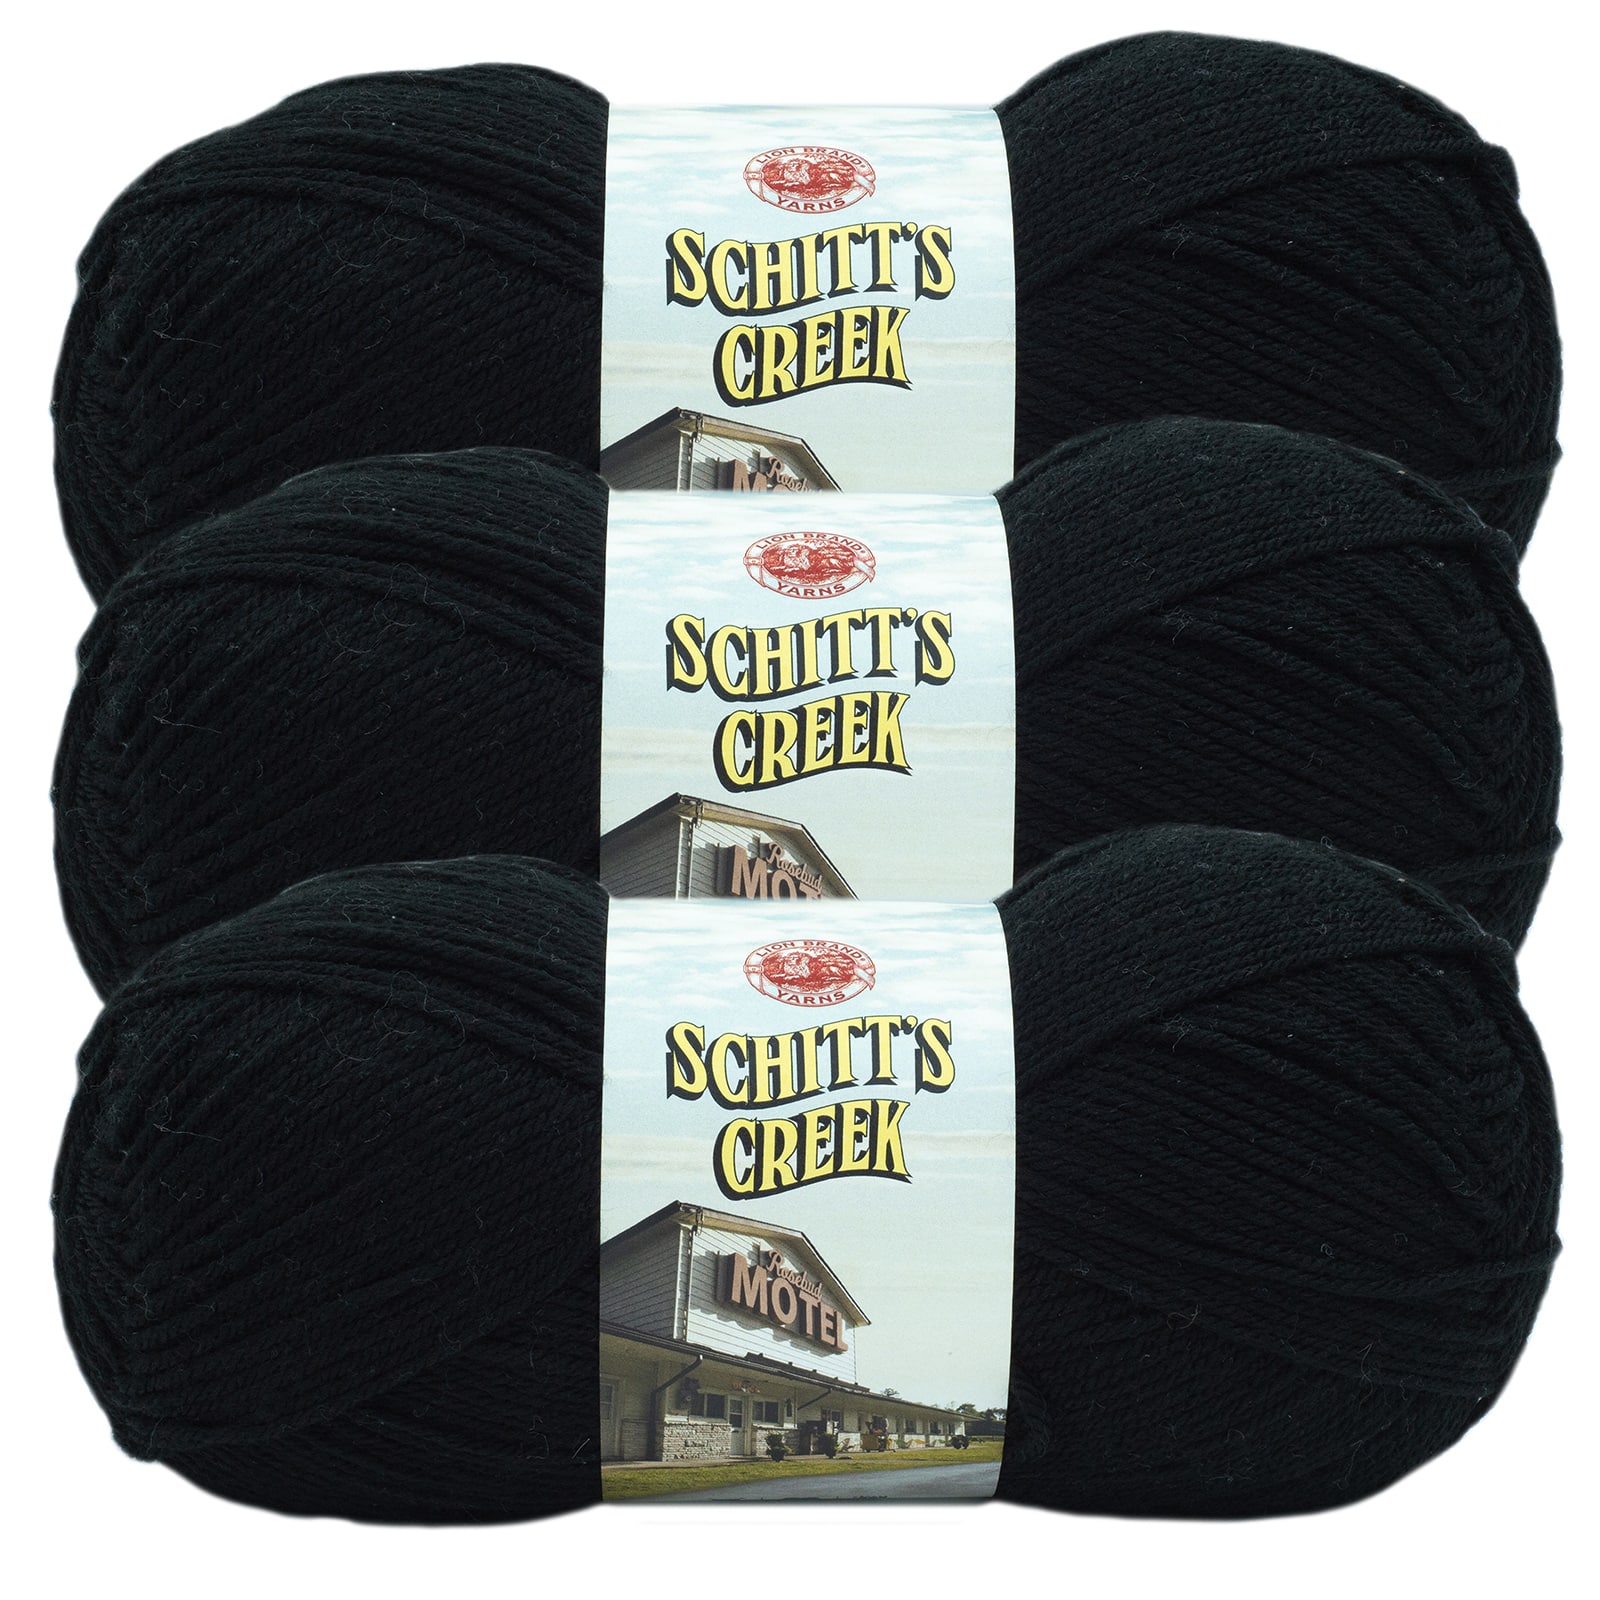 3 Pack Lion Brand® Schitt's Creek Yarn